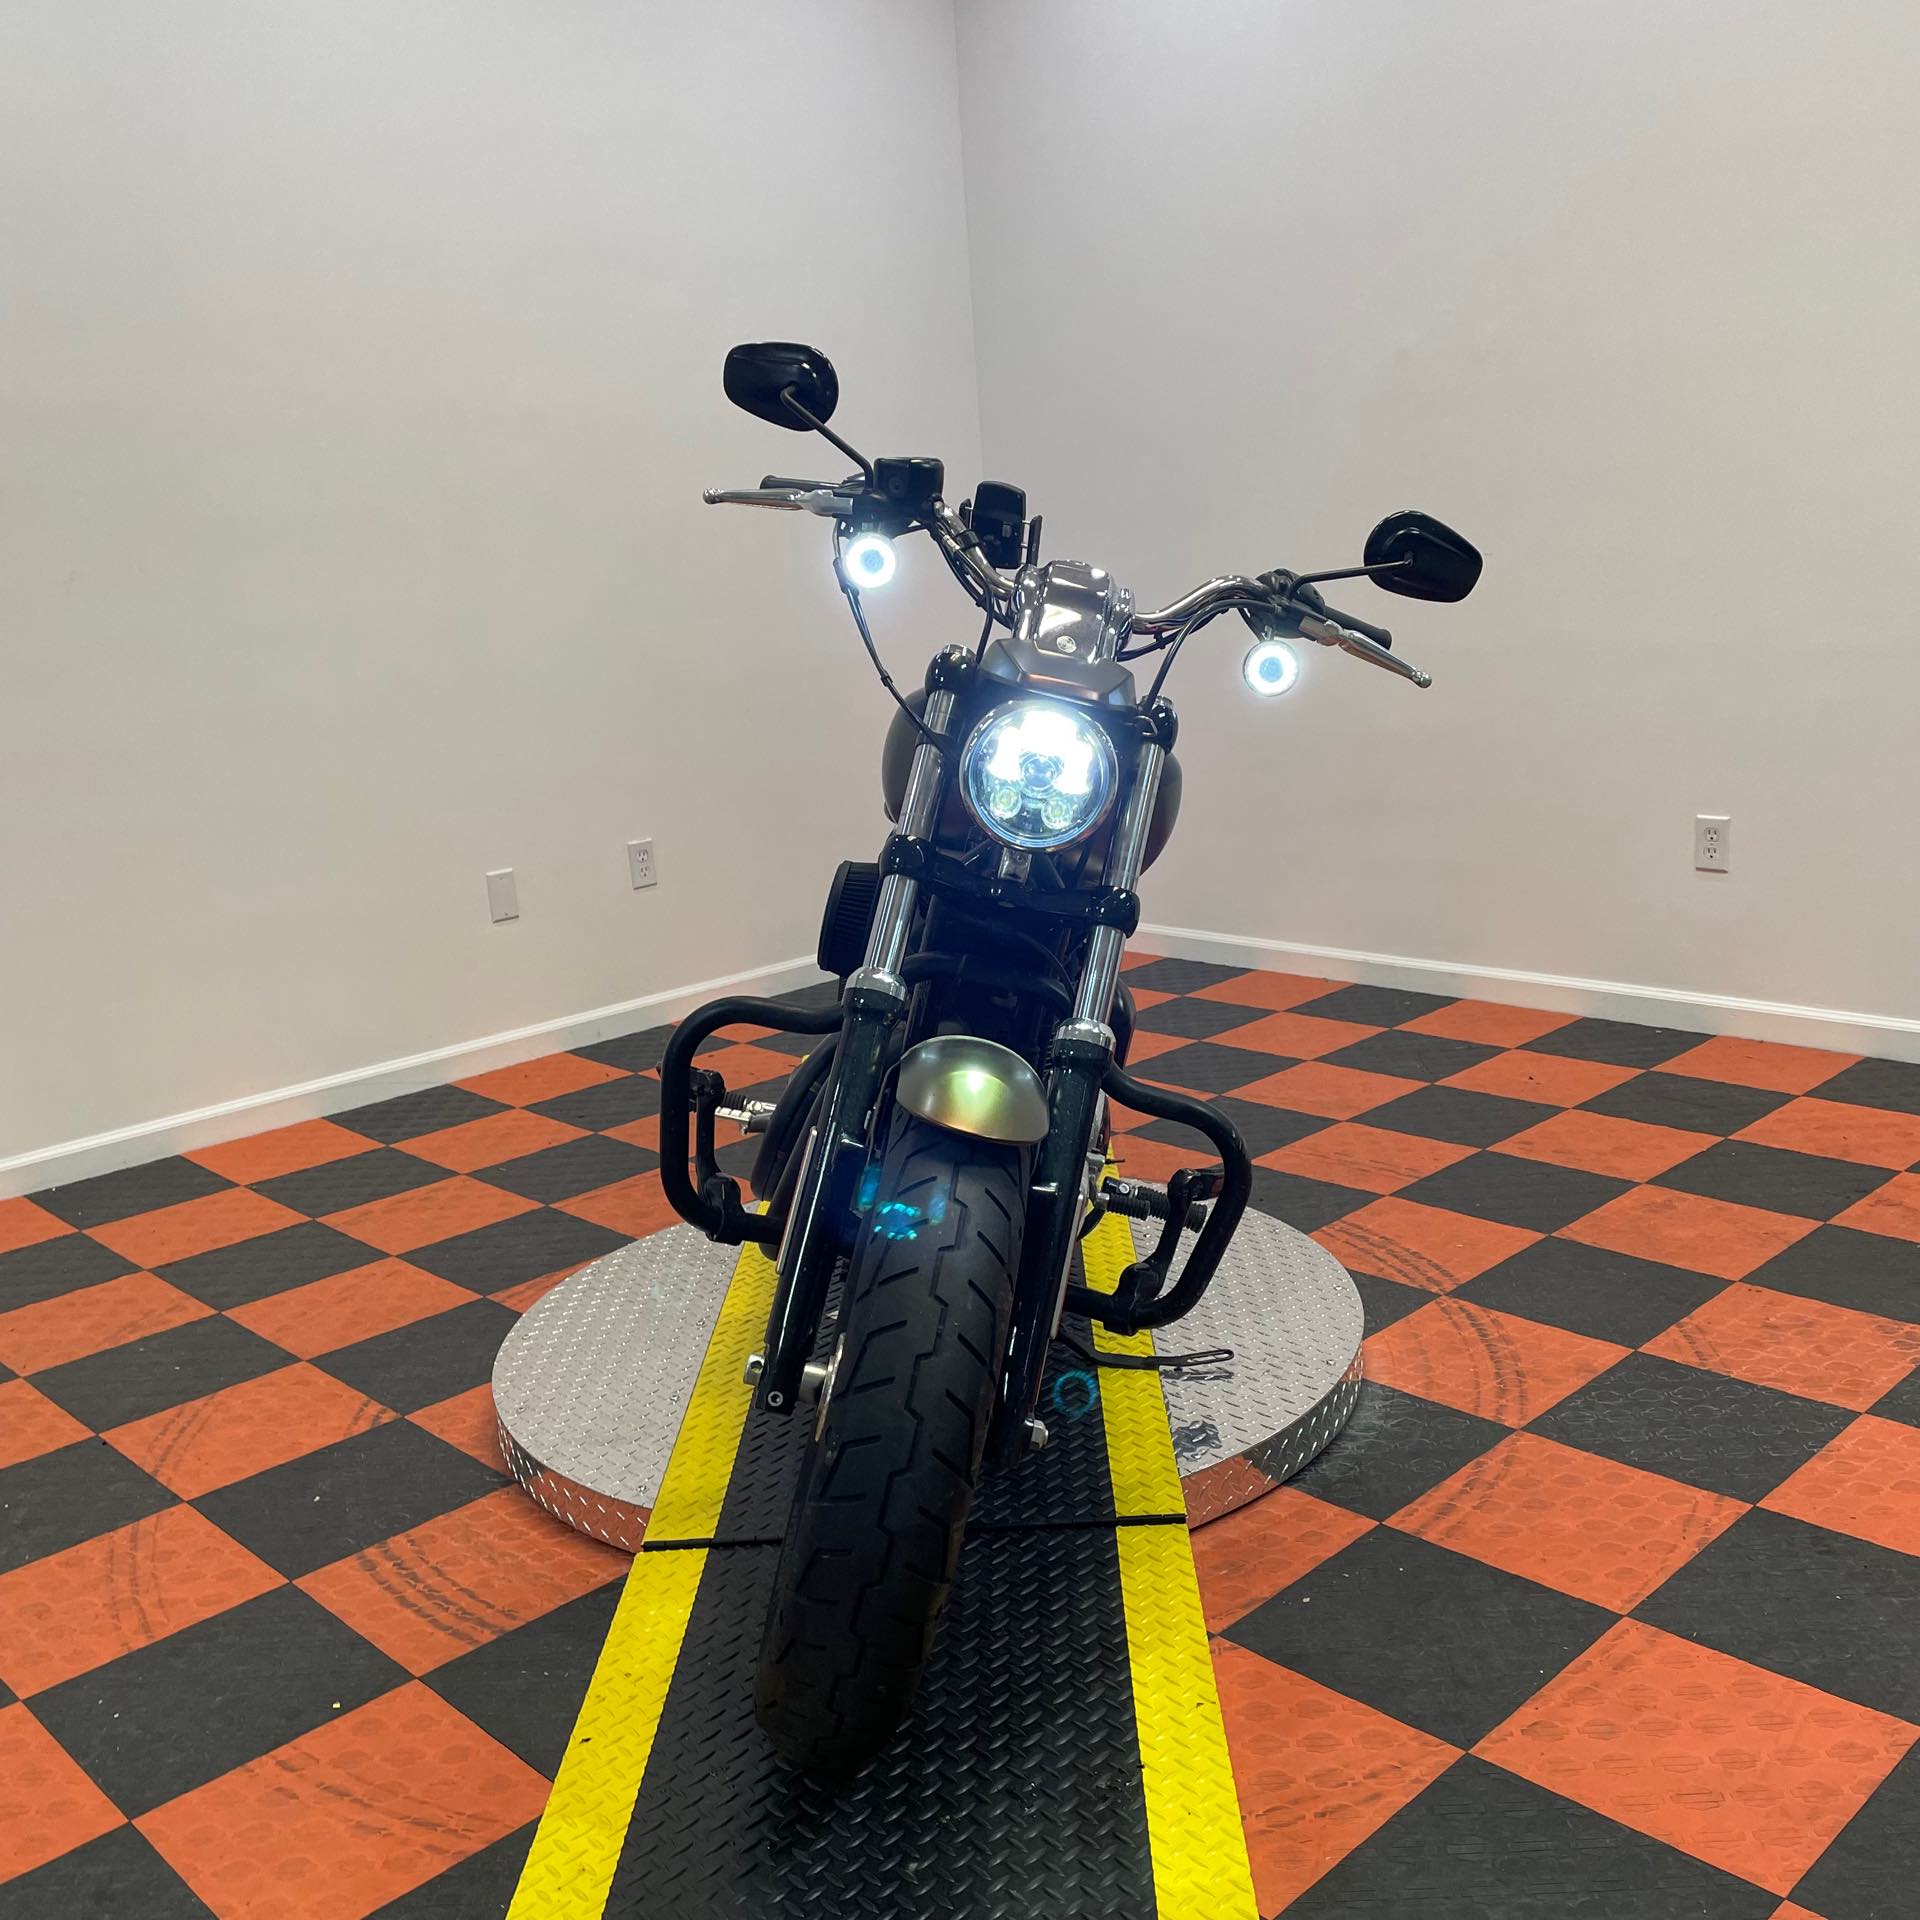 2019 Harley-Davidson Sportster 1200 Custom at Harley-Davidson of Indianapolis